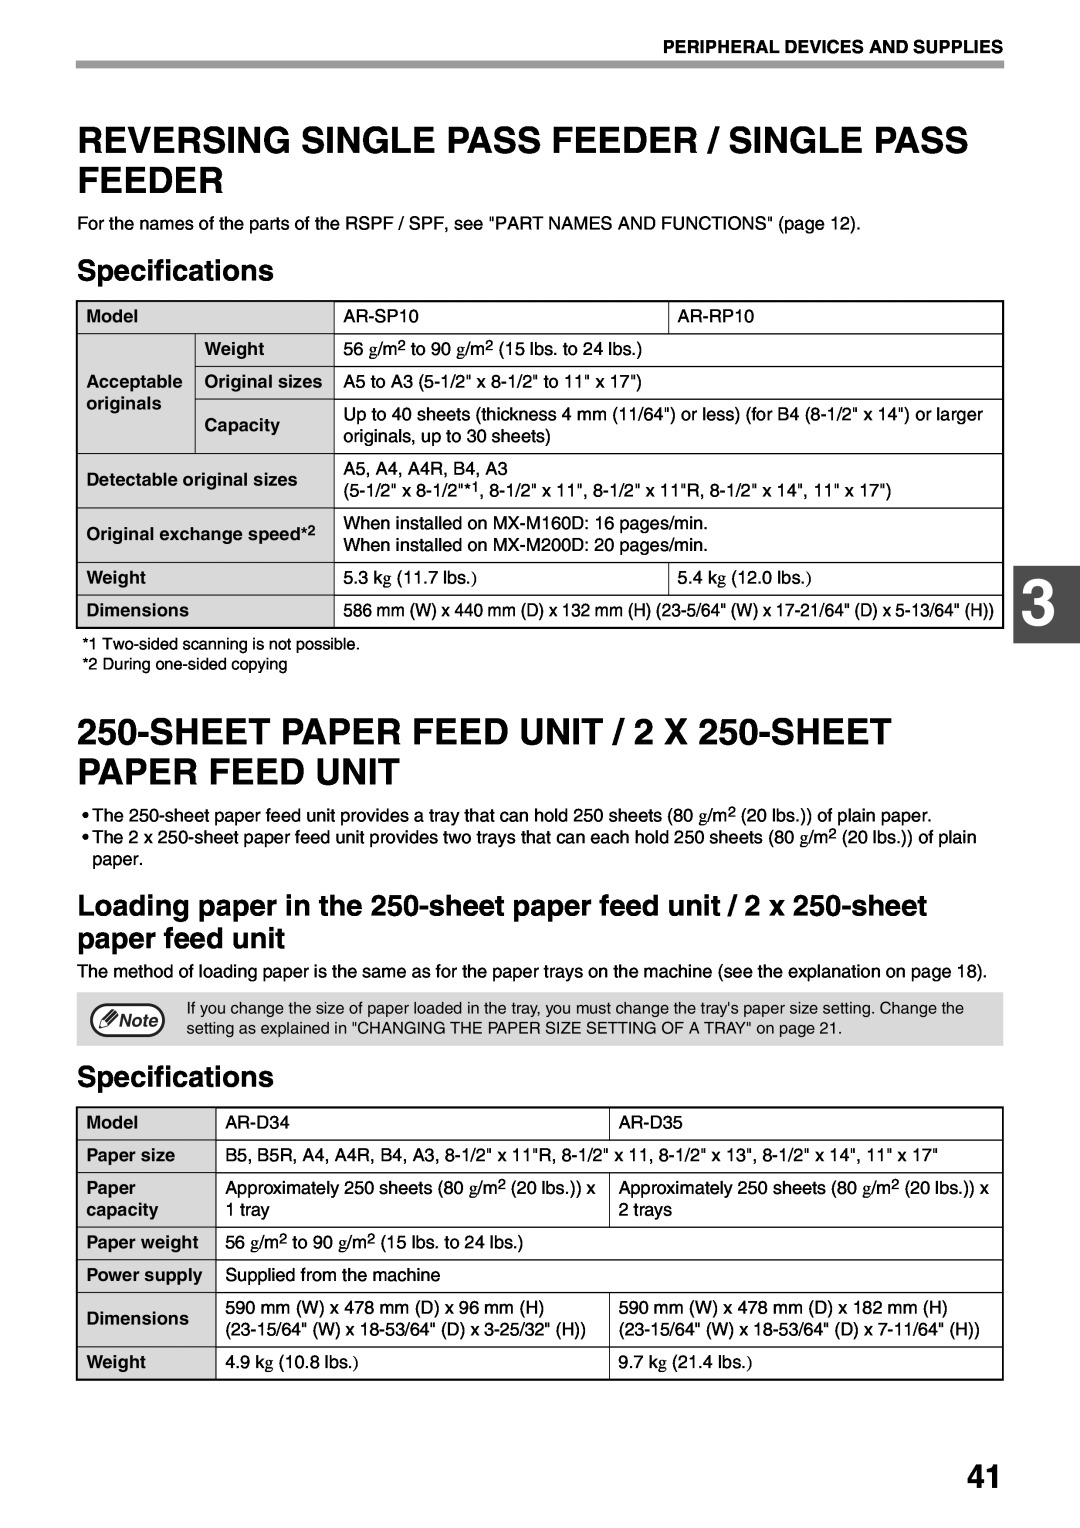 Sharp MX-M200D Reversing Single Pass Feeder / Single Pass Feeder, SHEET PAPER FEED UNIT / 2 X 250-SHEET PAPER FEED UNIT 